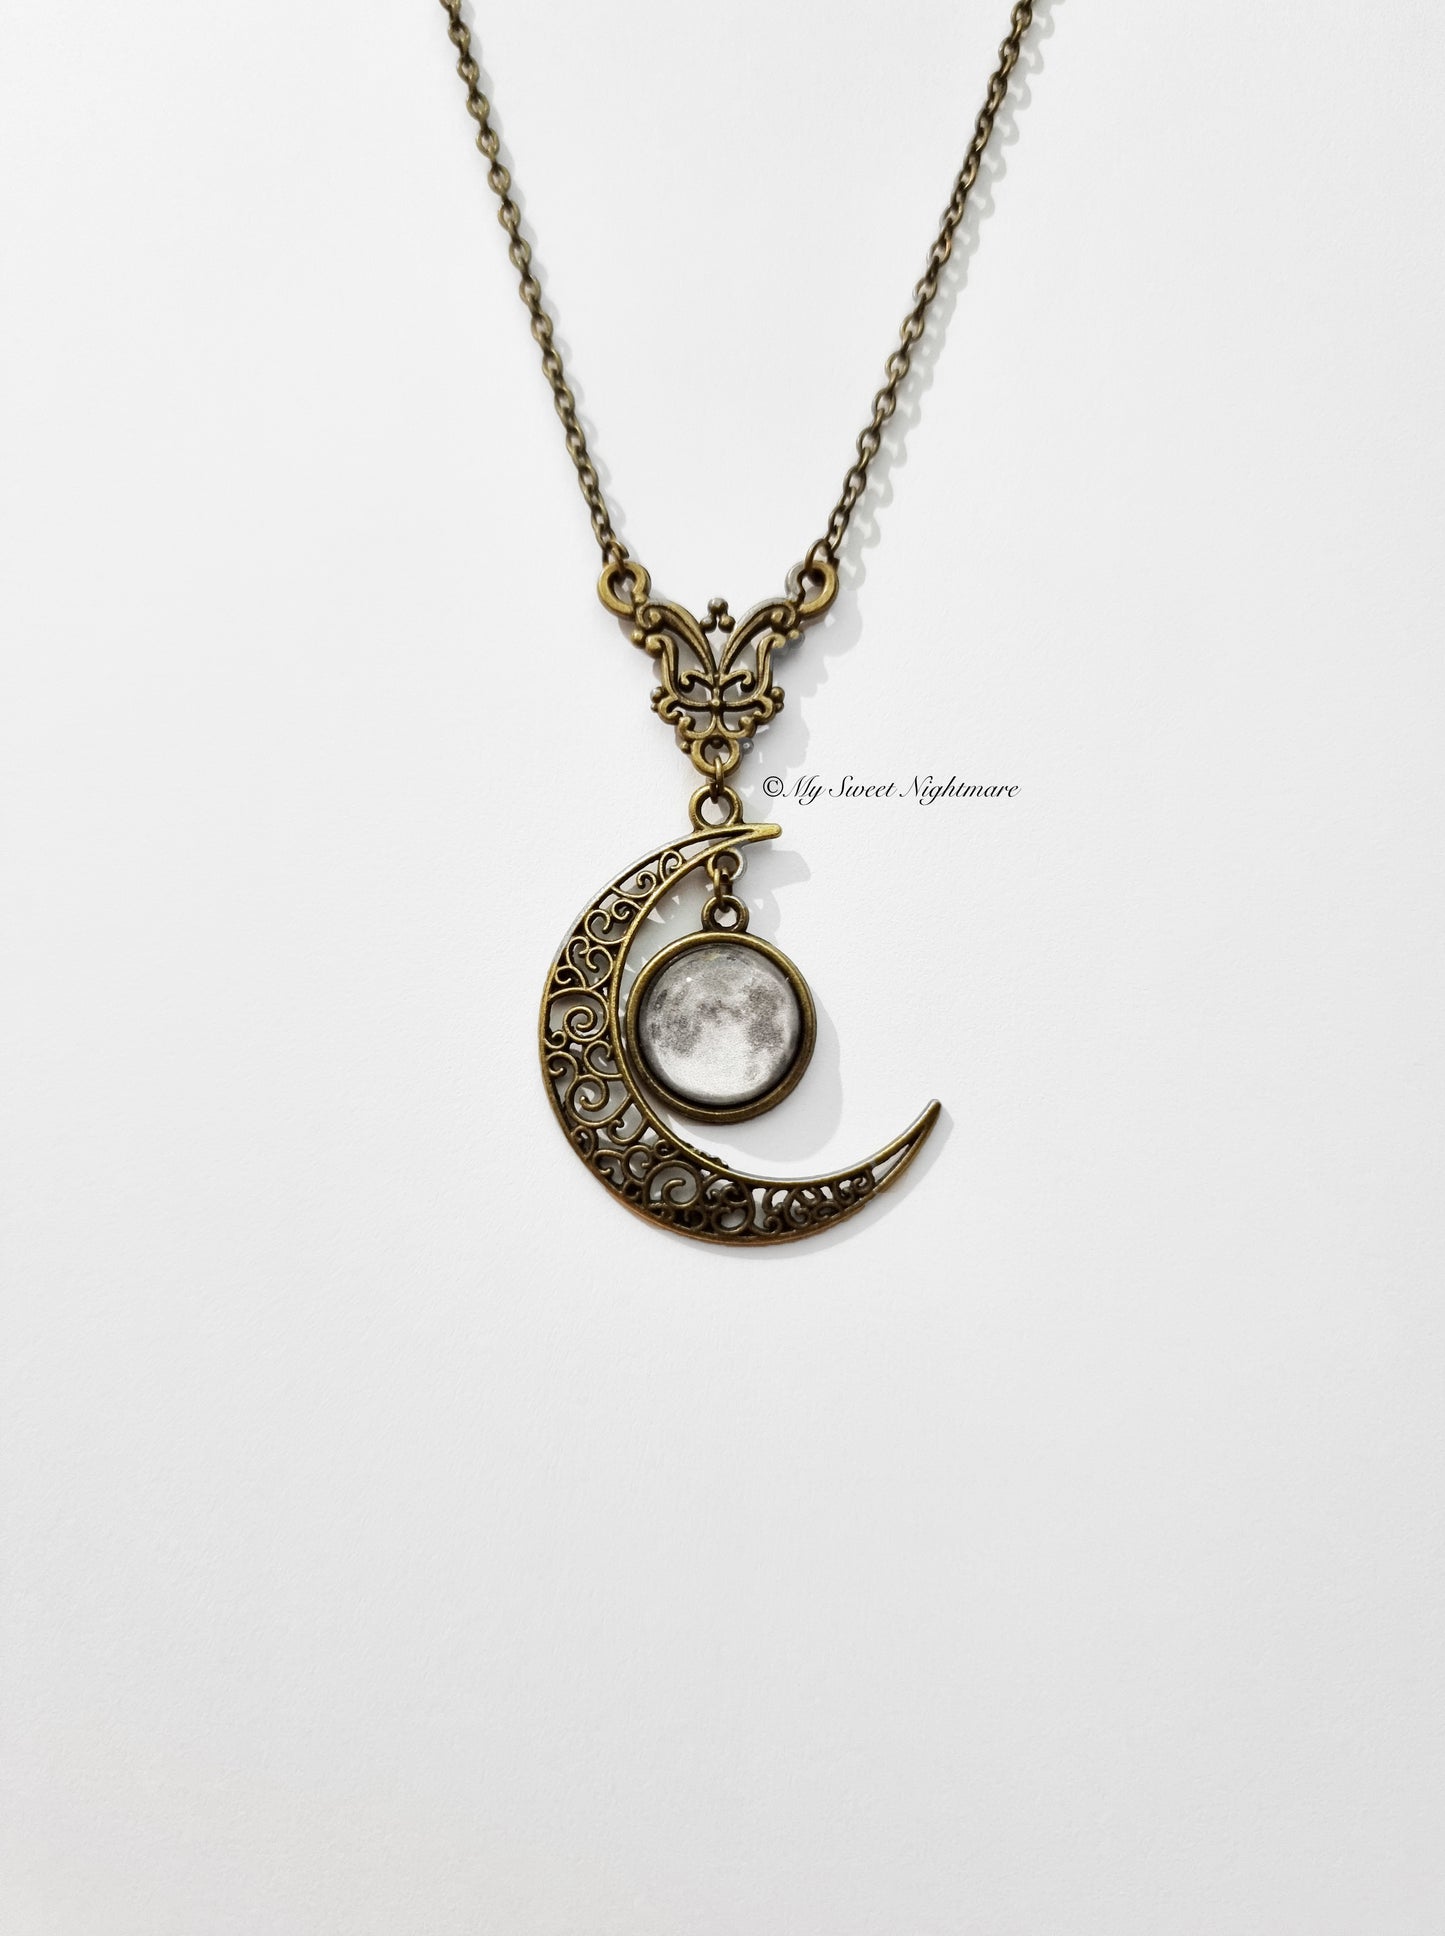 Bronze moon necklace